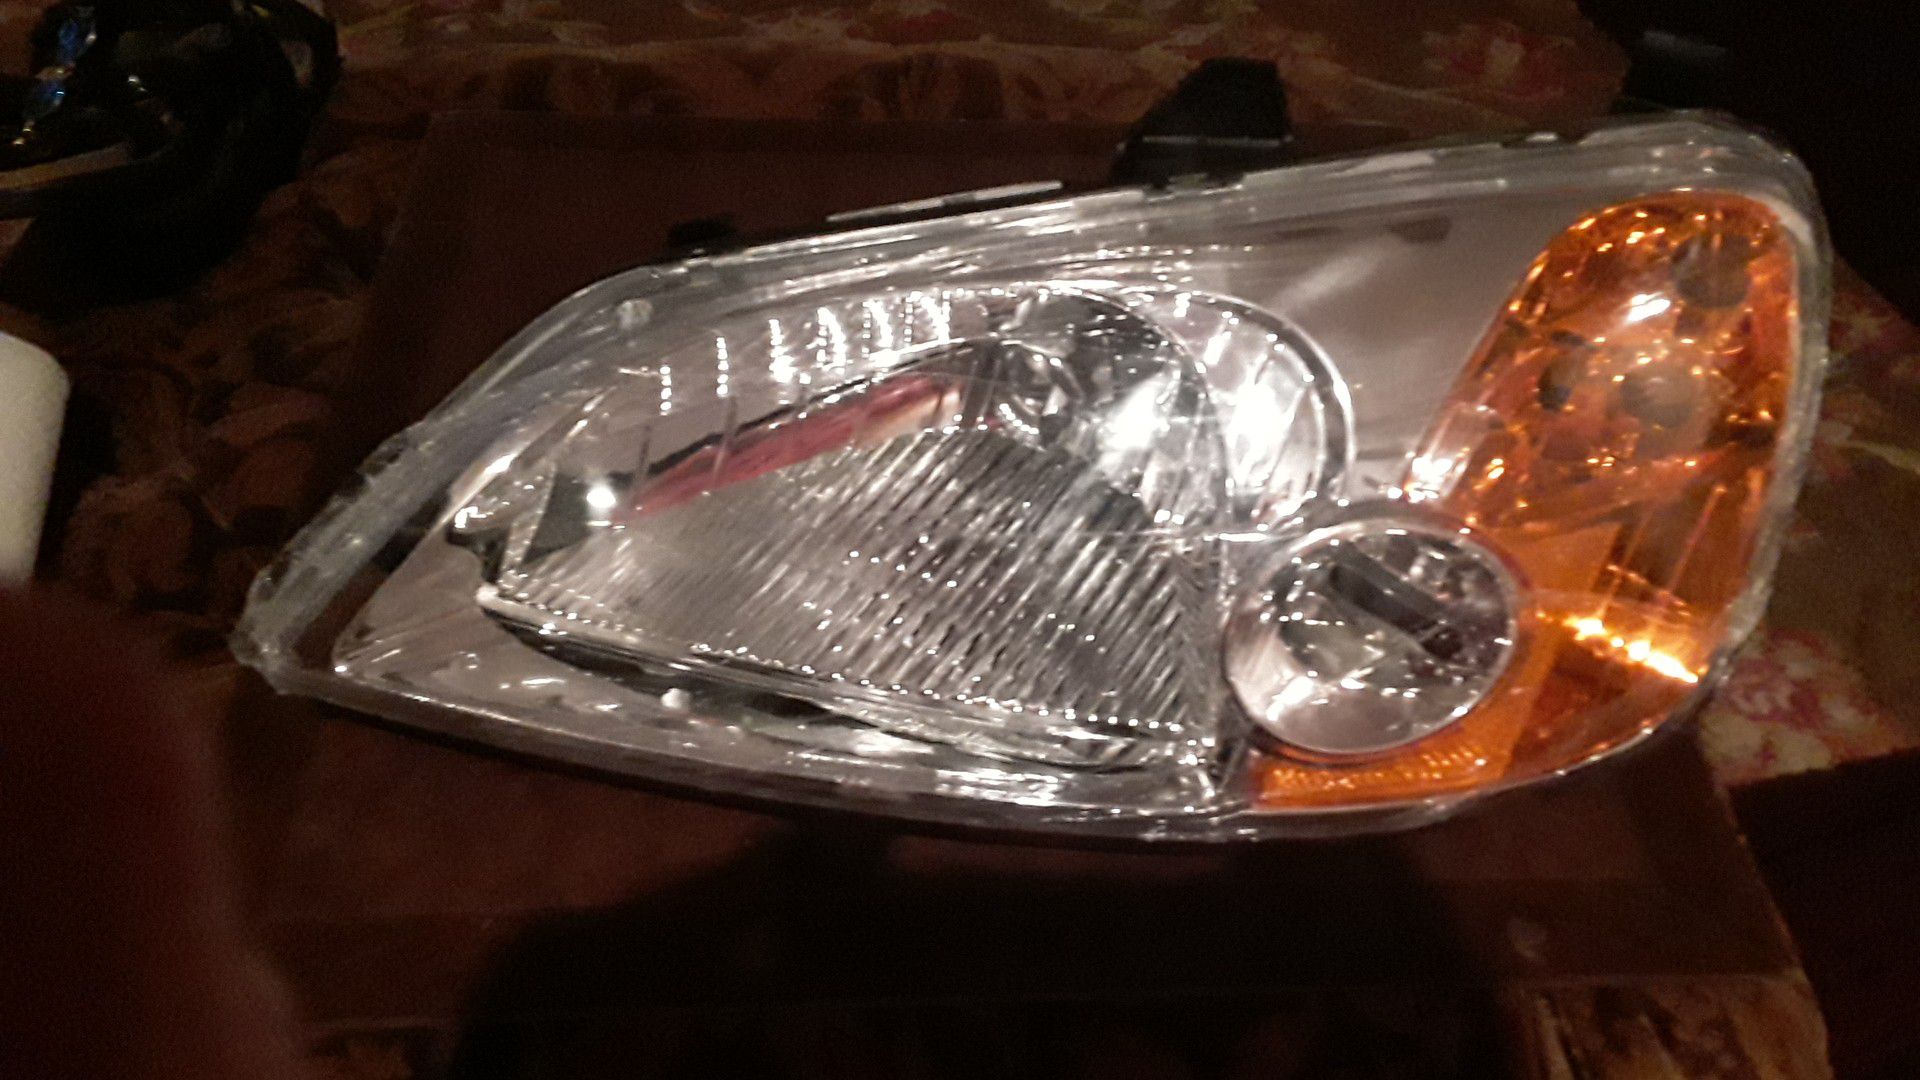 Honda civic hybrid 01-03 headlight cover